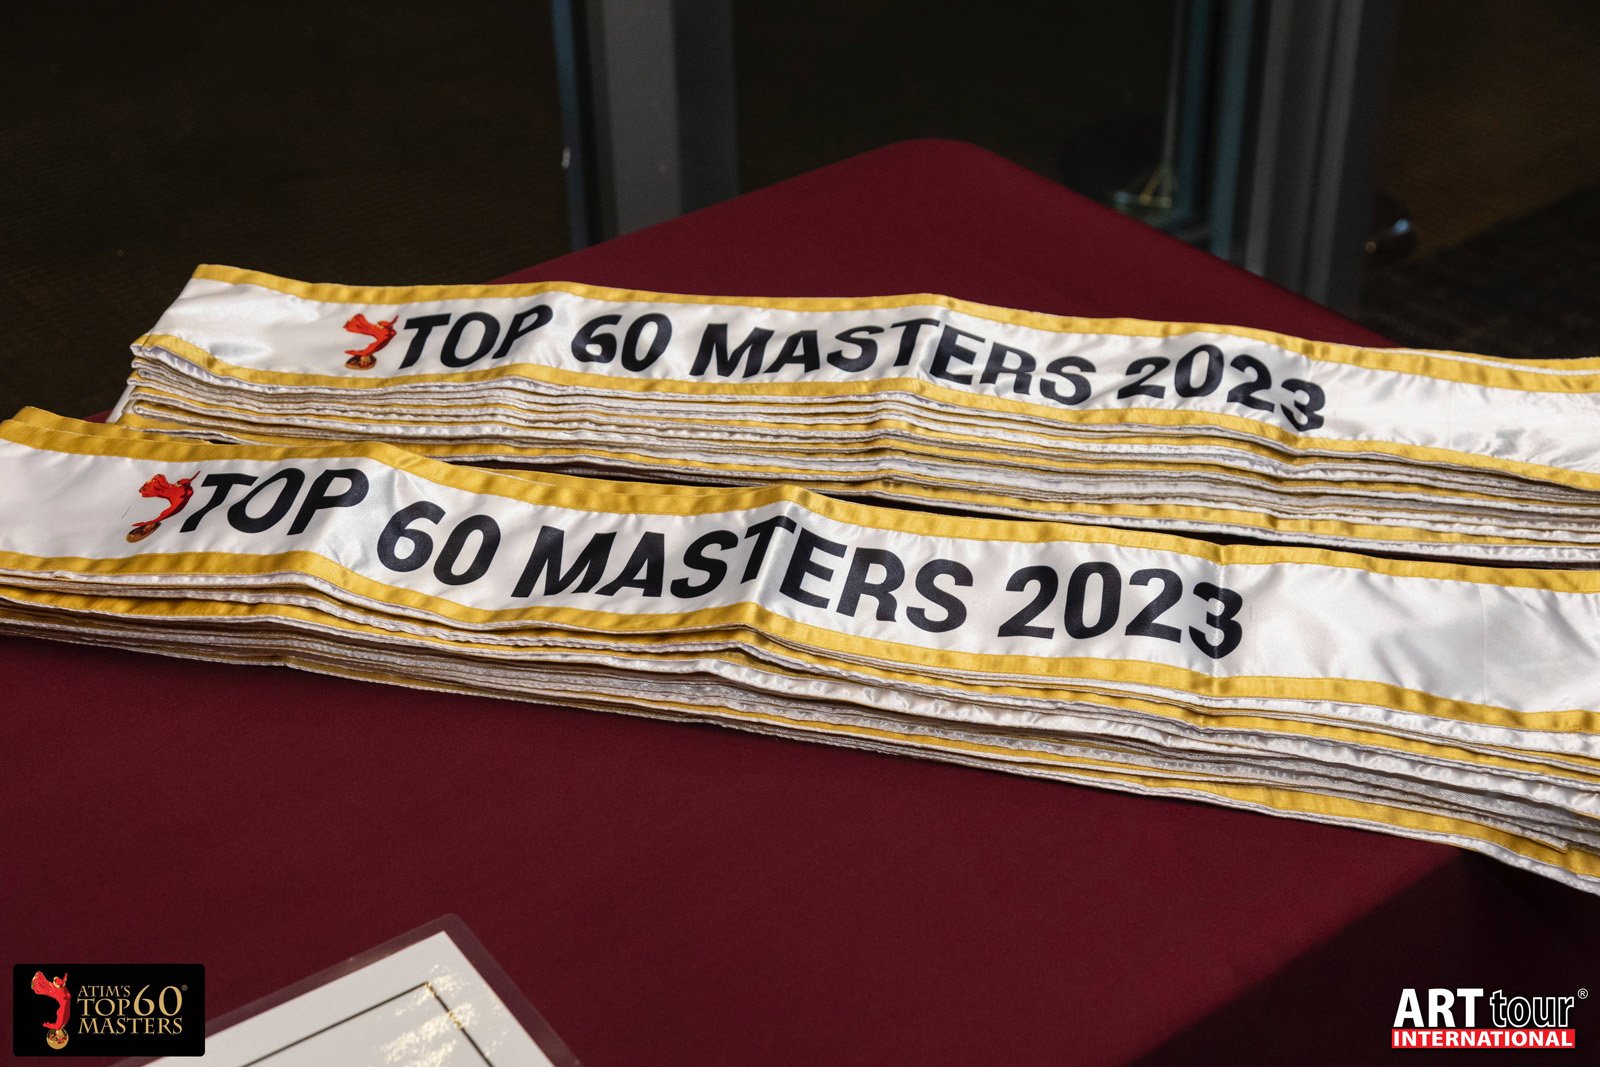 Top 60 Masters Awards